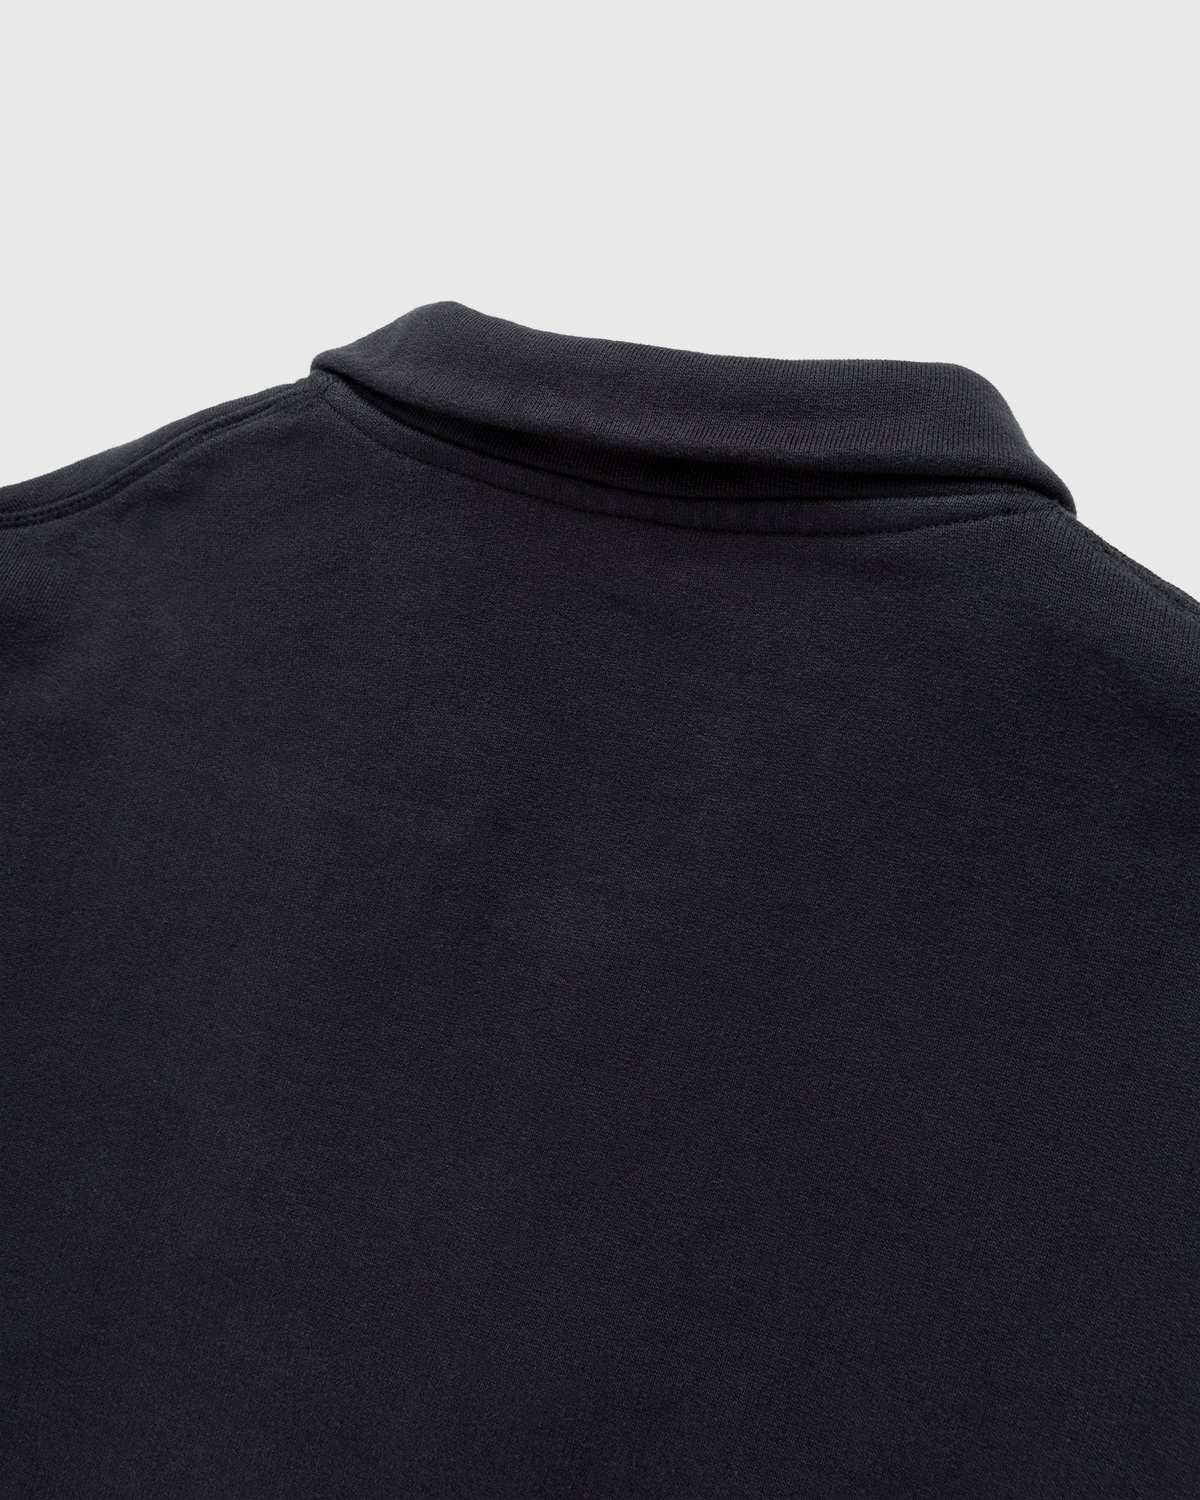 Highsnobiety - Zip Mock Neck Staples Fleece Black - Clothing - Black - Image 5